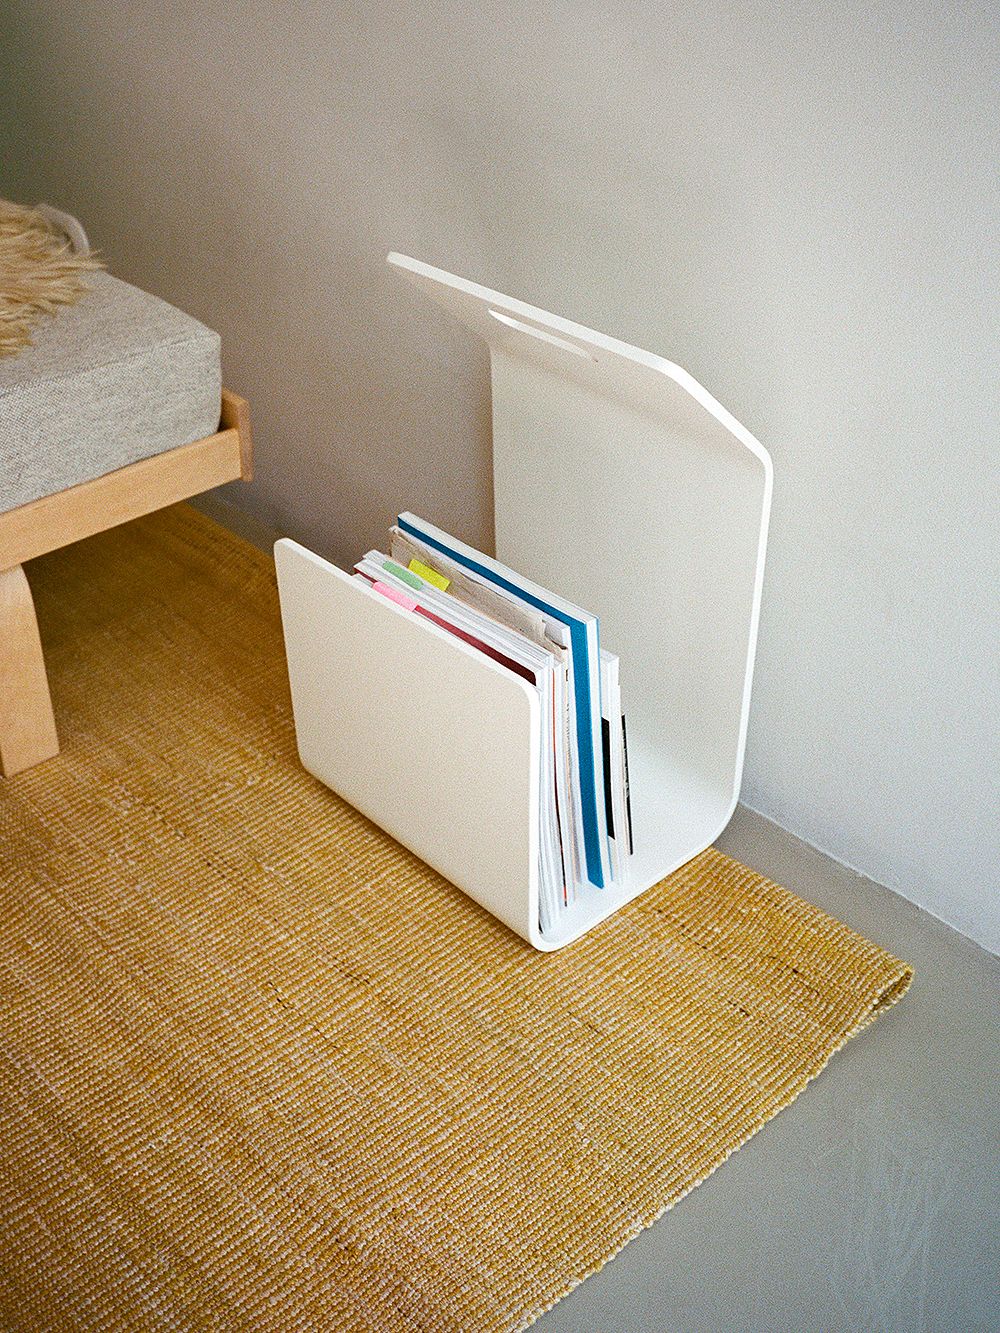 An image of Artek's white Kanto magazine or firewood rack as part of the living room decor.